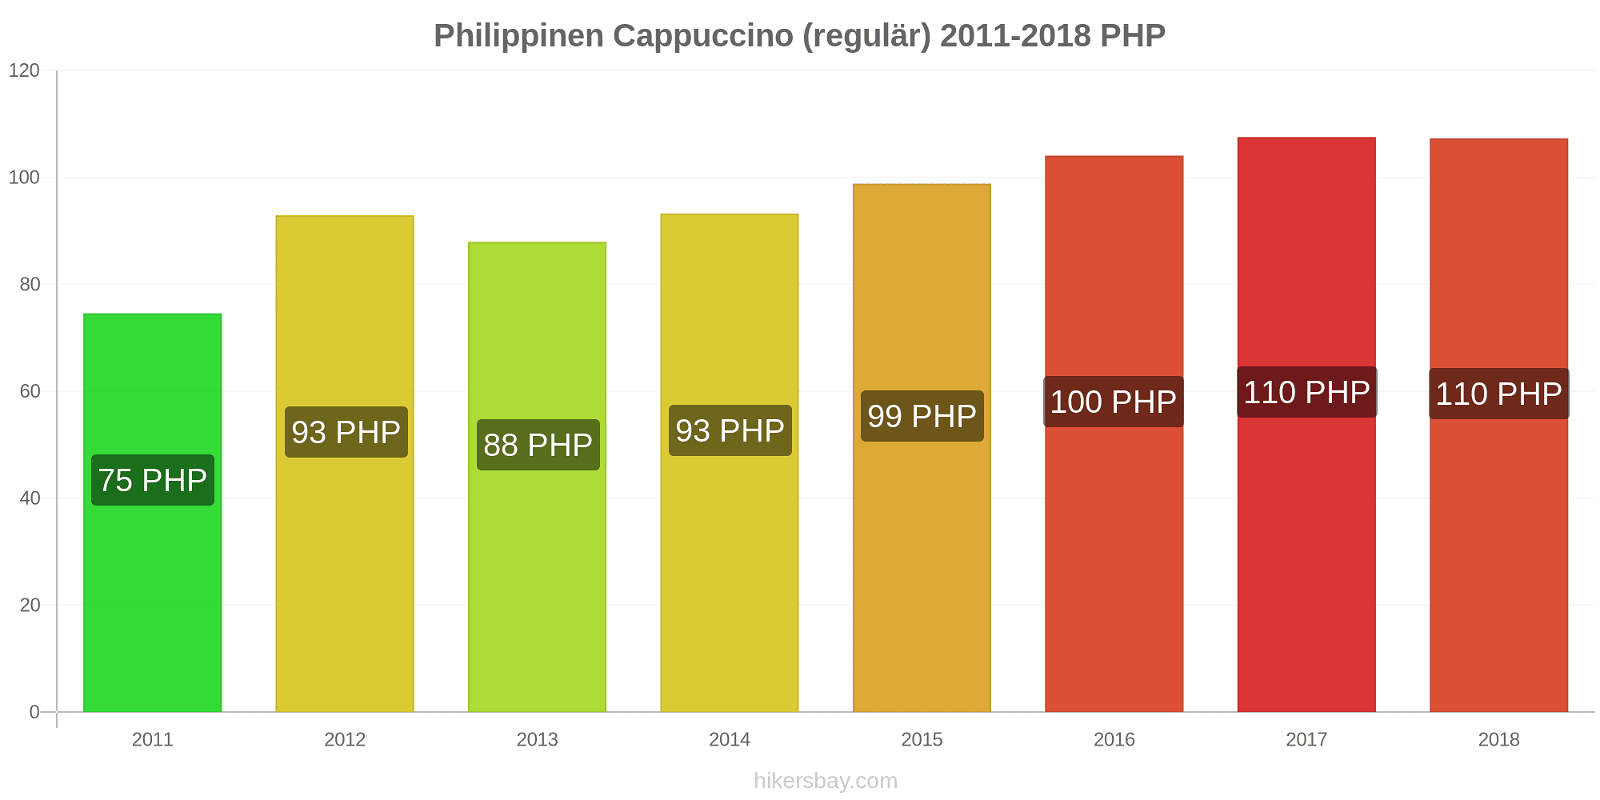 Philippinen Preisänderungen Cappuccino (regulär) hikersbay.com